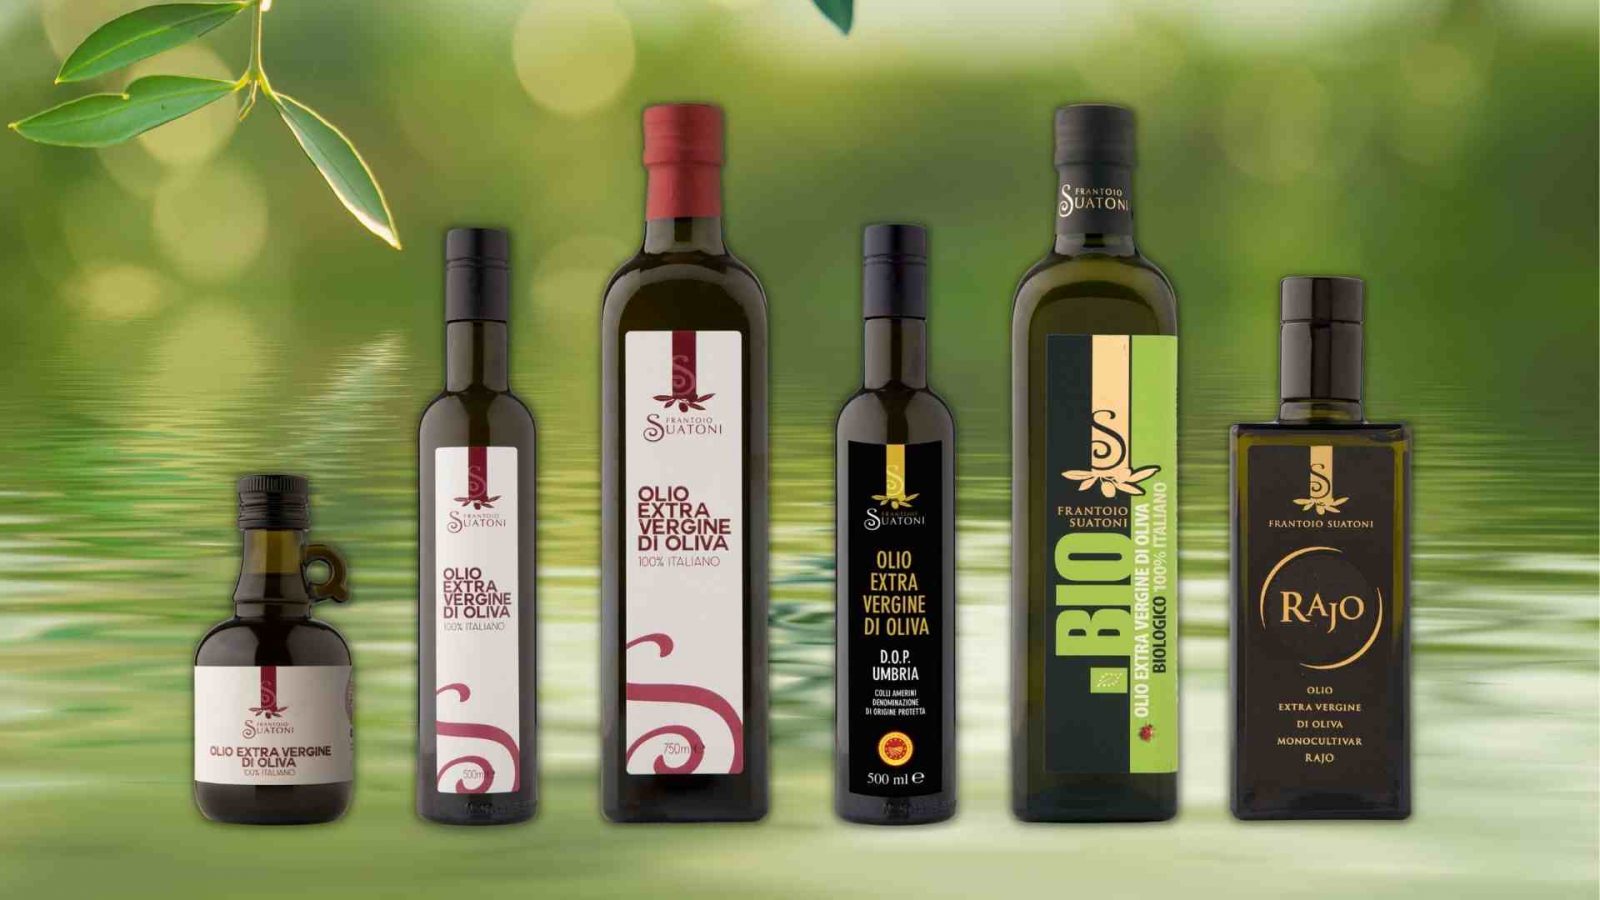 EVOO - Extra virgin olive oil range Frantoio Suatoni